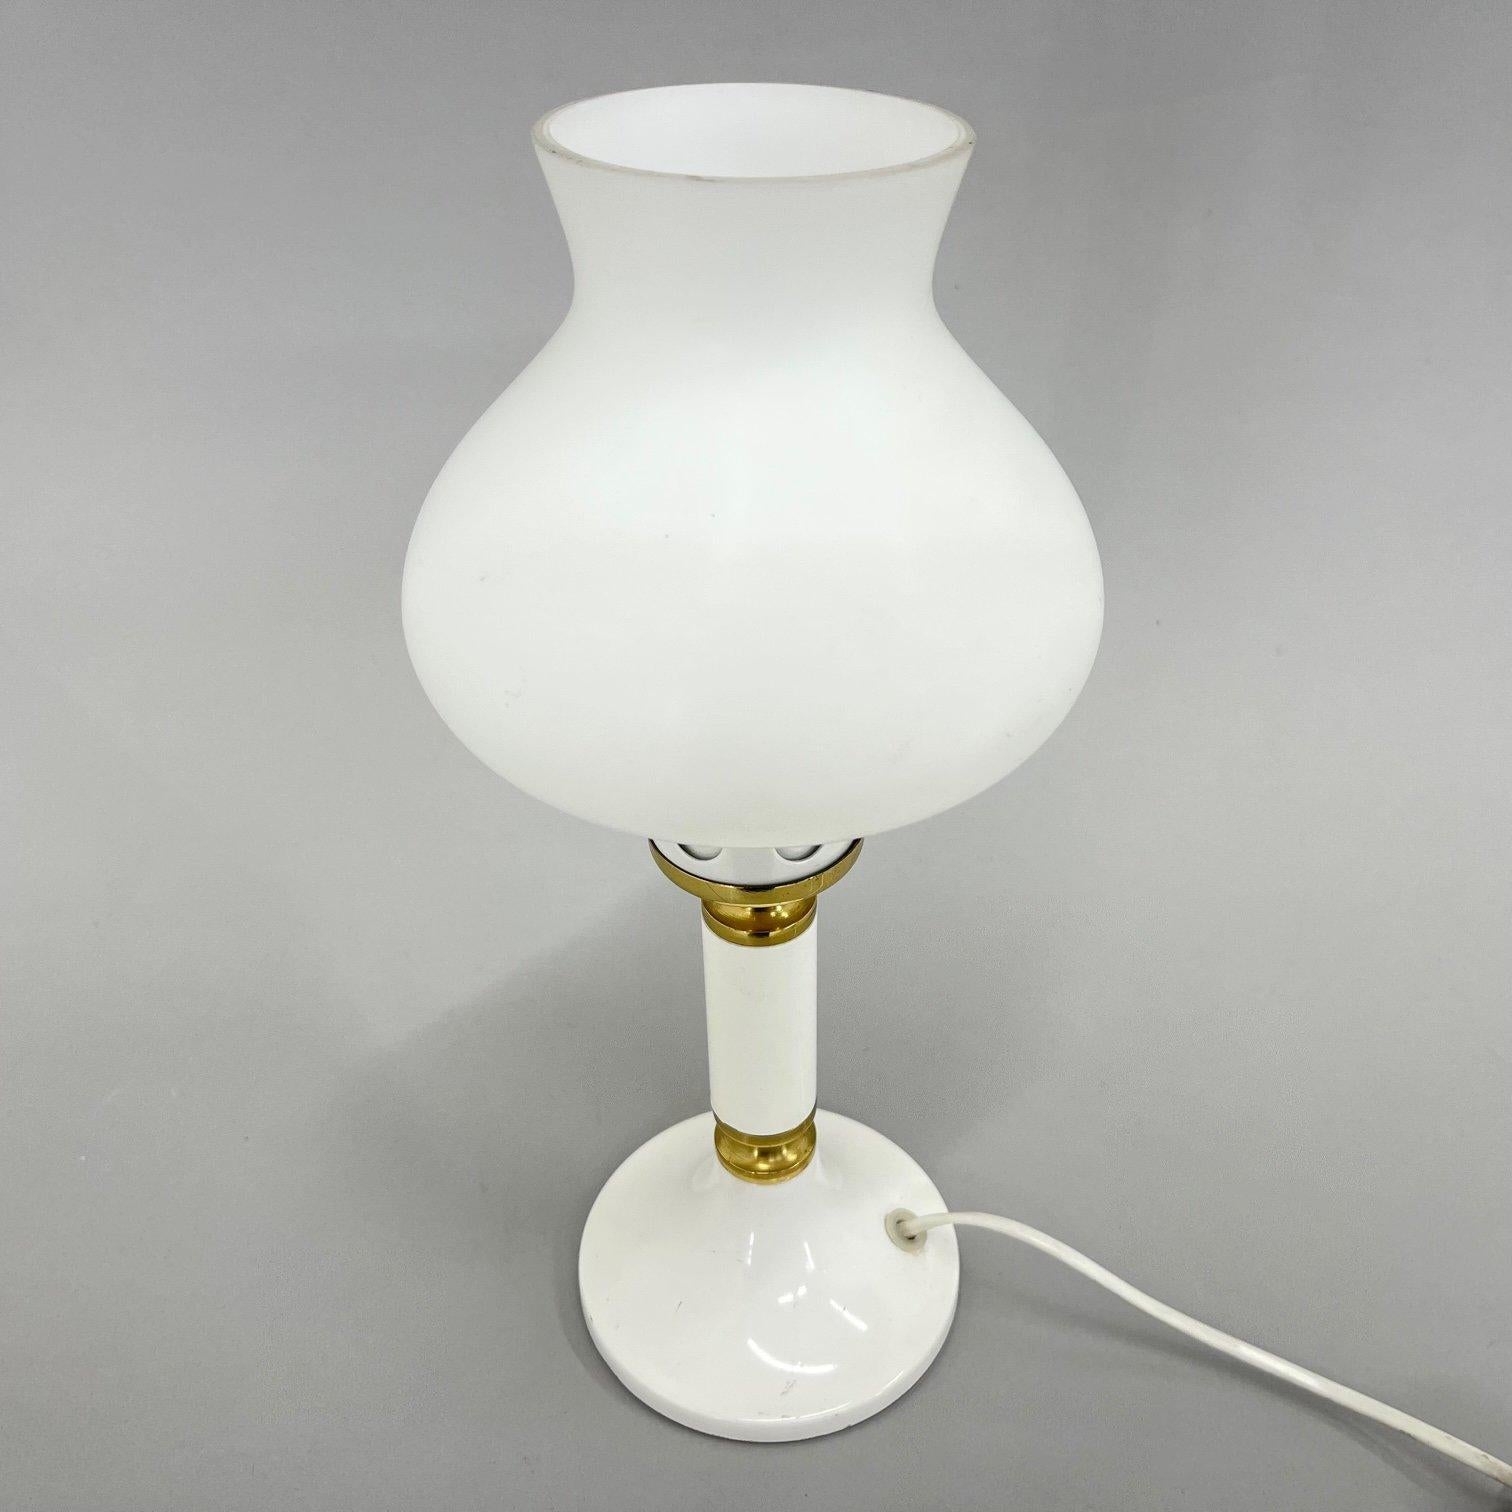 Metal Vintage Table Lamp by Drukov in Czechoslovakia, 1970's For Sale